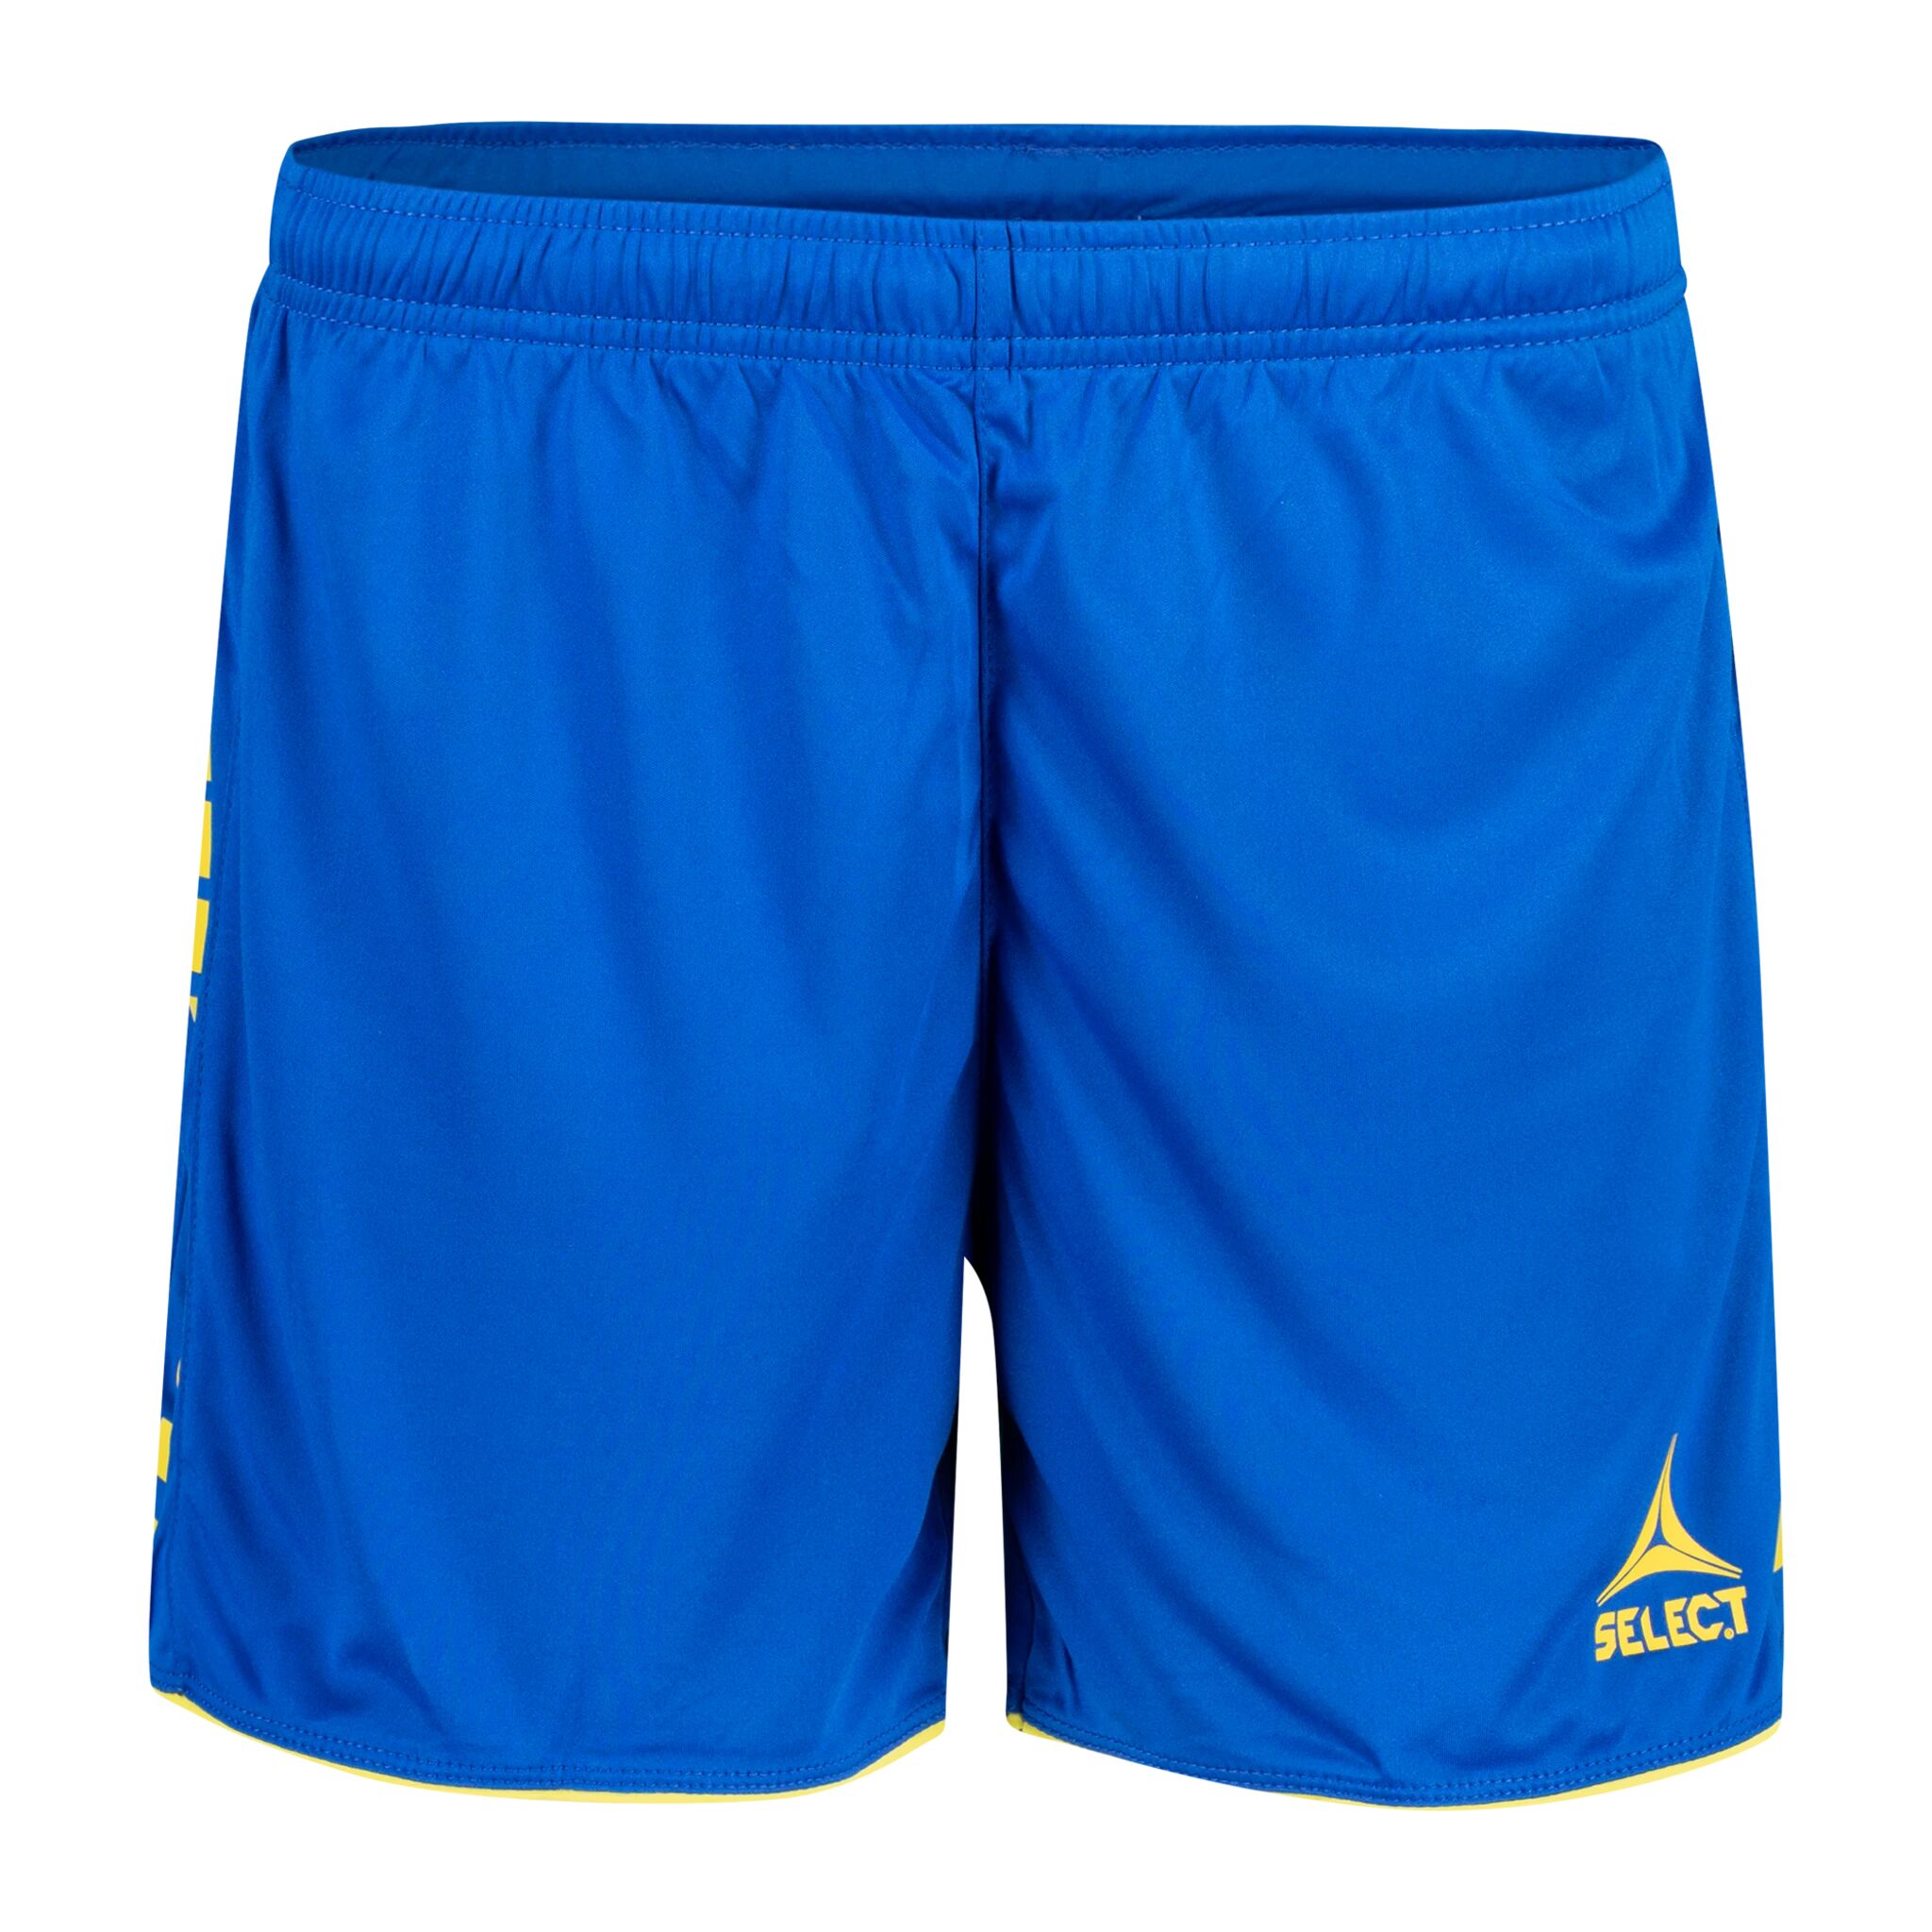 Select Player shorts Argentina, shorts dame XL blue